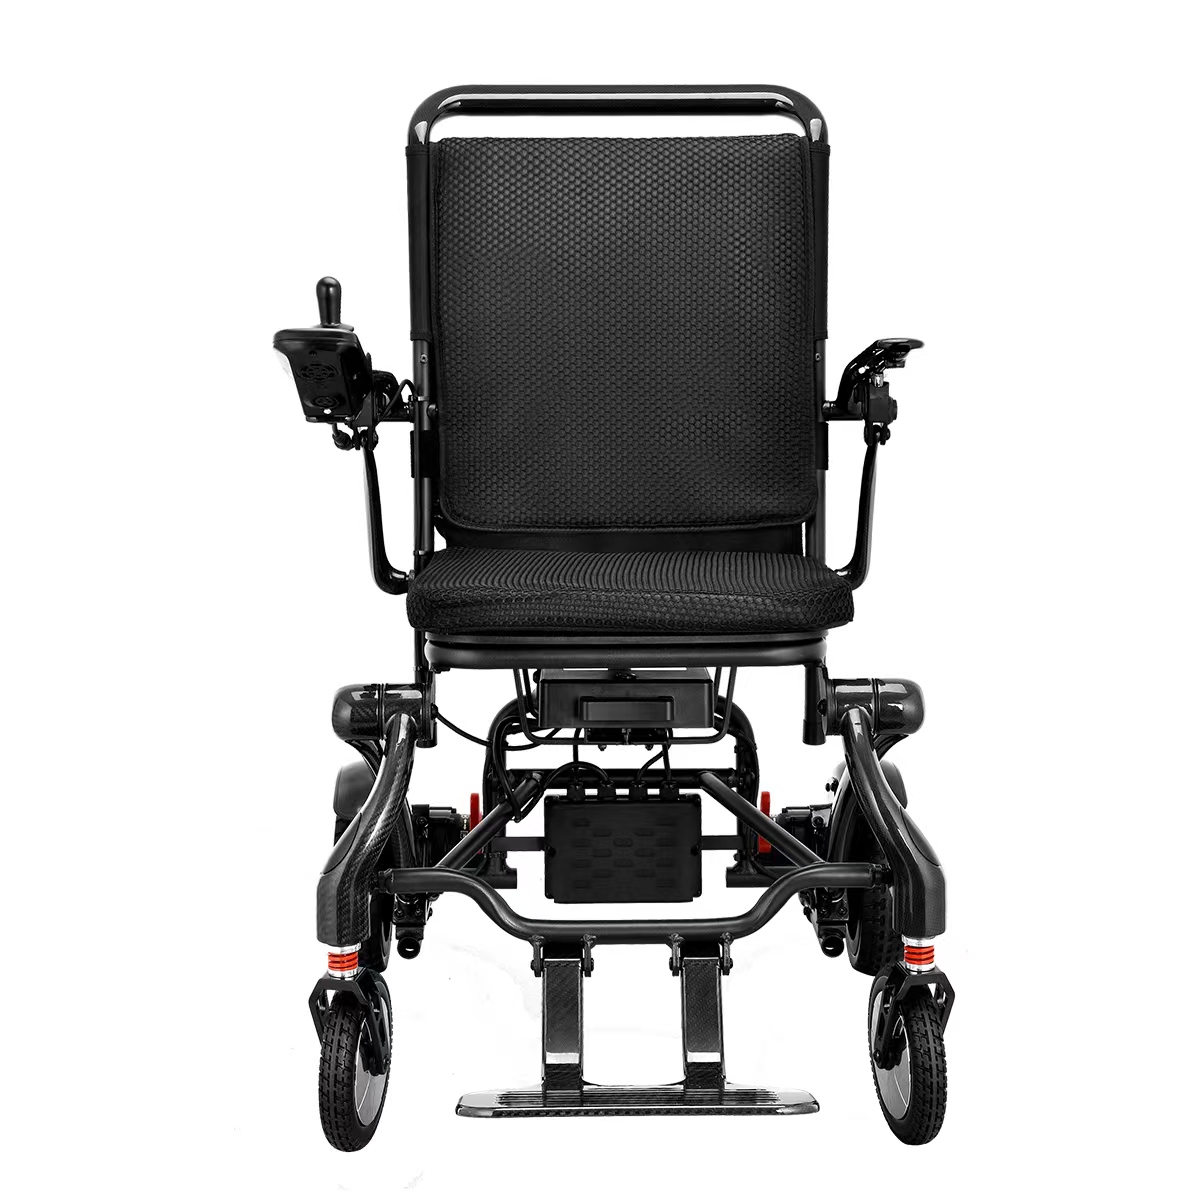 Carbon Fiber Wheelchair: Lightweight Mobility and Enhanced Comfort